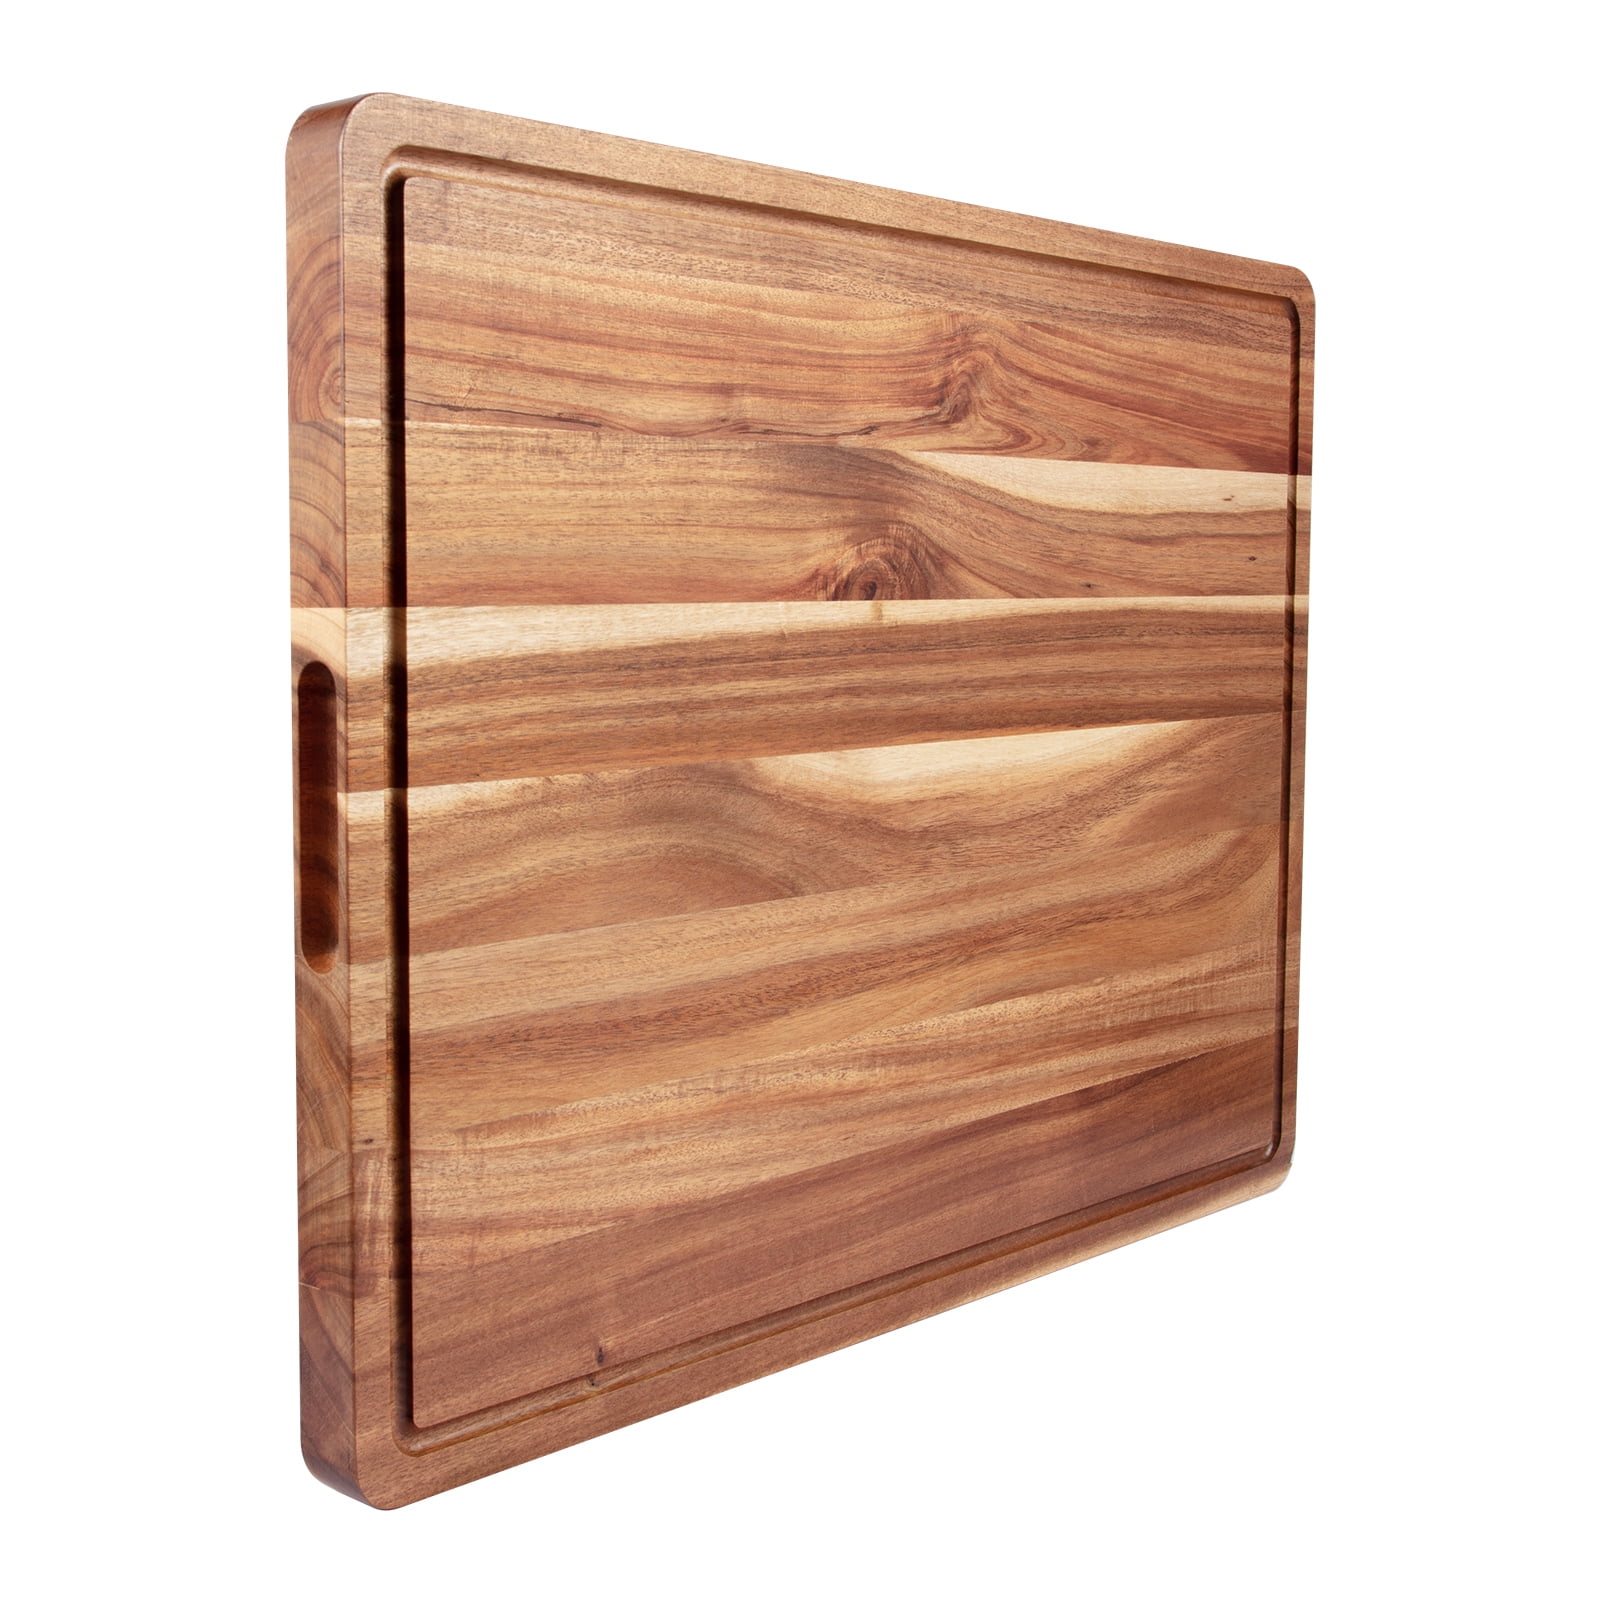 24 x 24 Wood Cutting Board & Butcher Block